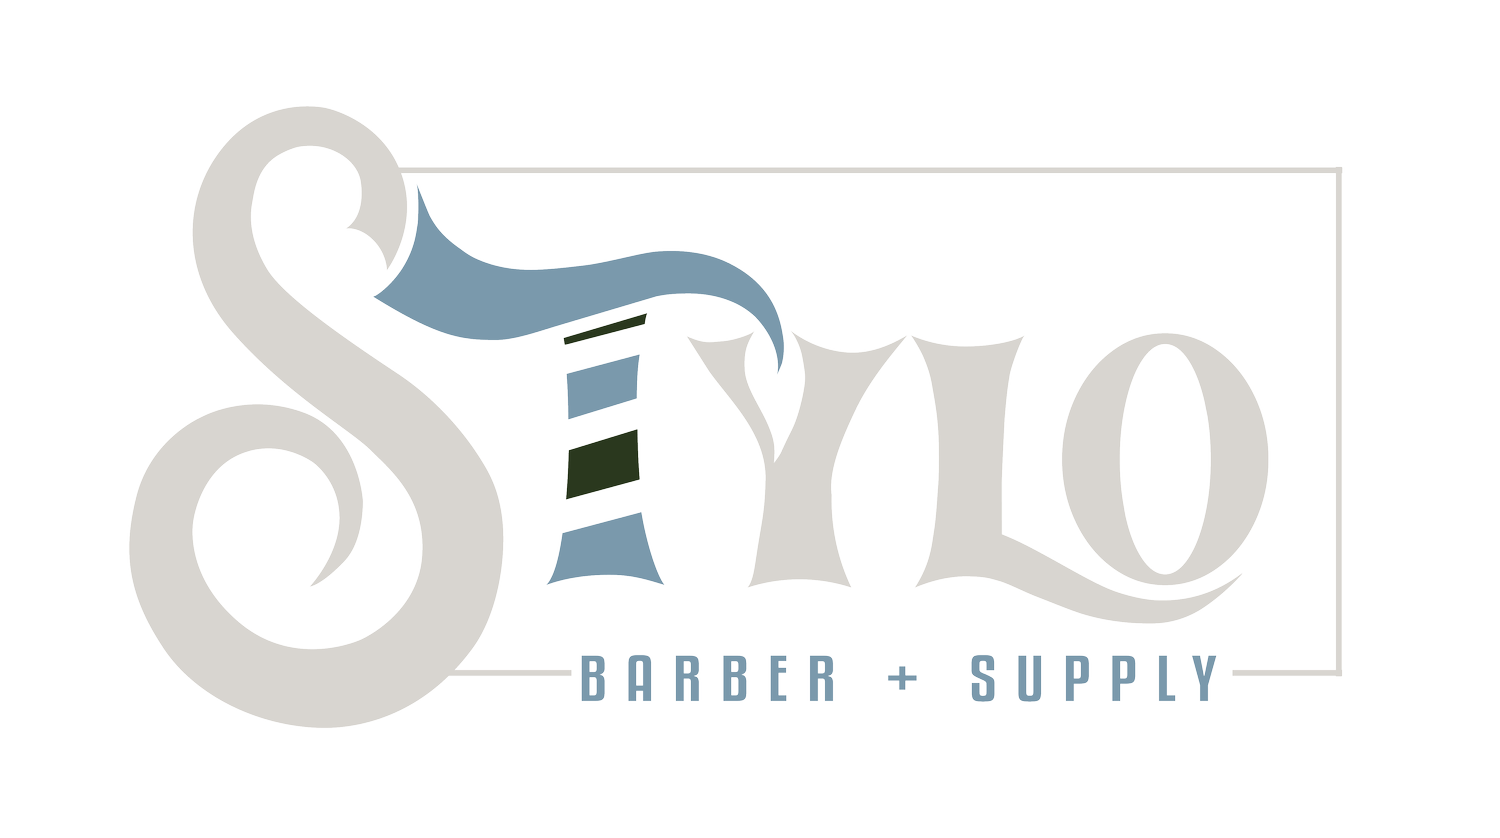 Stylo Barber + Supply